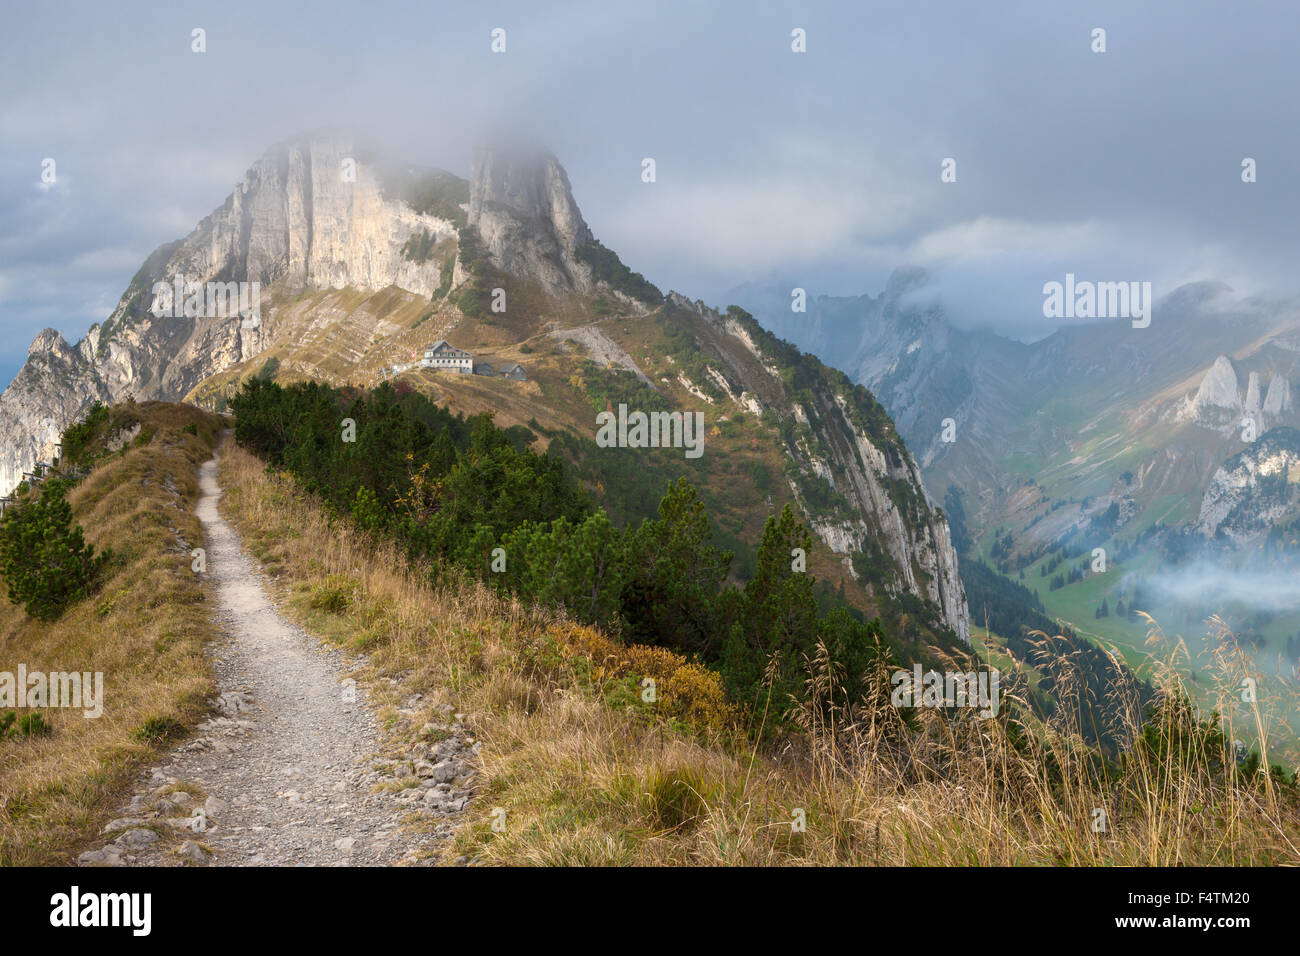 Stauberen, Svizzera cantone di Appenzell, Appenzell Innerrhoden, Alpstein, sentiero, mountain inn Foto Stock